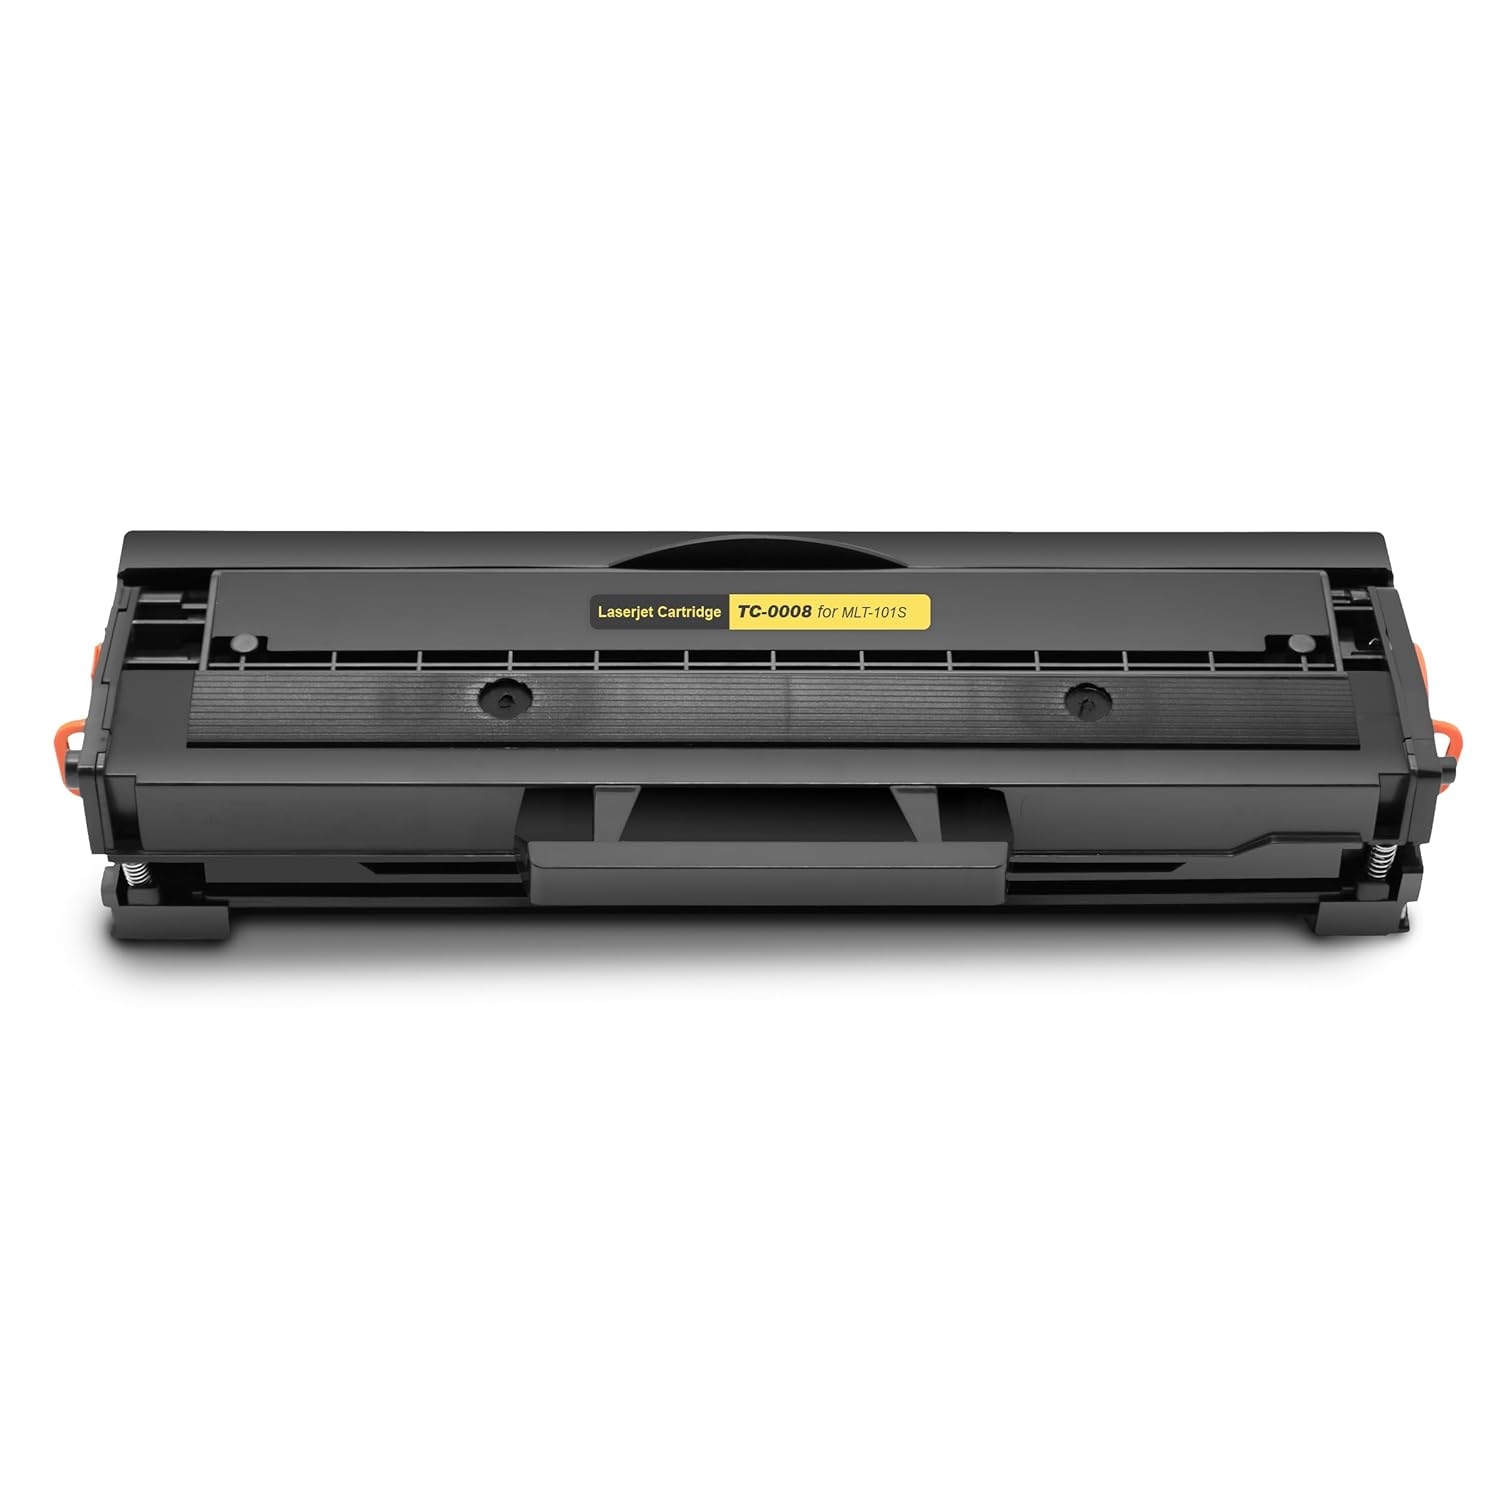 FRONTECH MLT101S Laserjet Toner Cartridge for Samsung ML2160/2160W/2165/2165W/2168W/SCX3400F/3400FW/3405F/3405FW/SF760P/ML2161/ML2162G/ML2166W, Samsung Laser Printer Cartridges